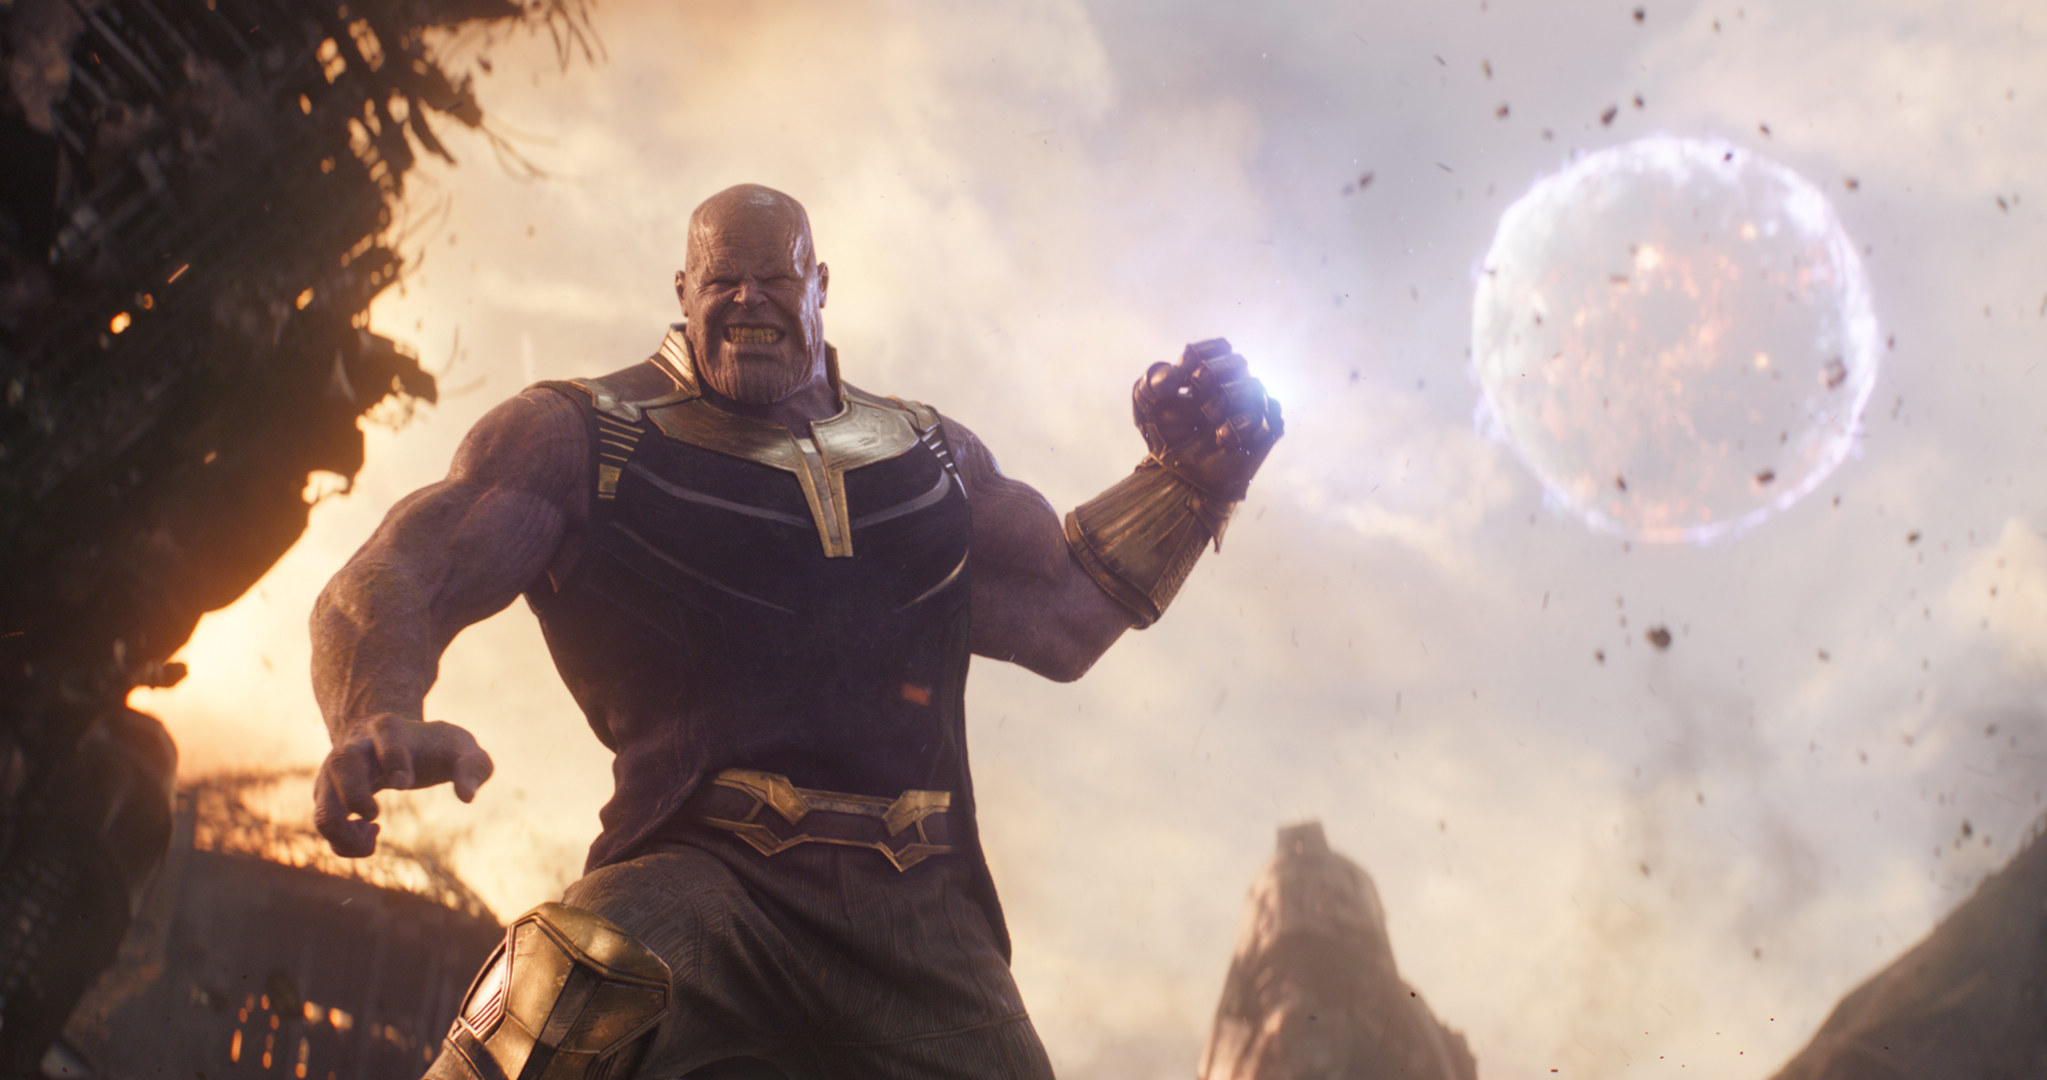 Thanos raises his fist